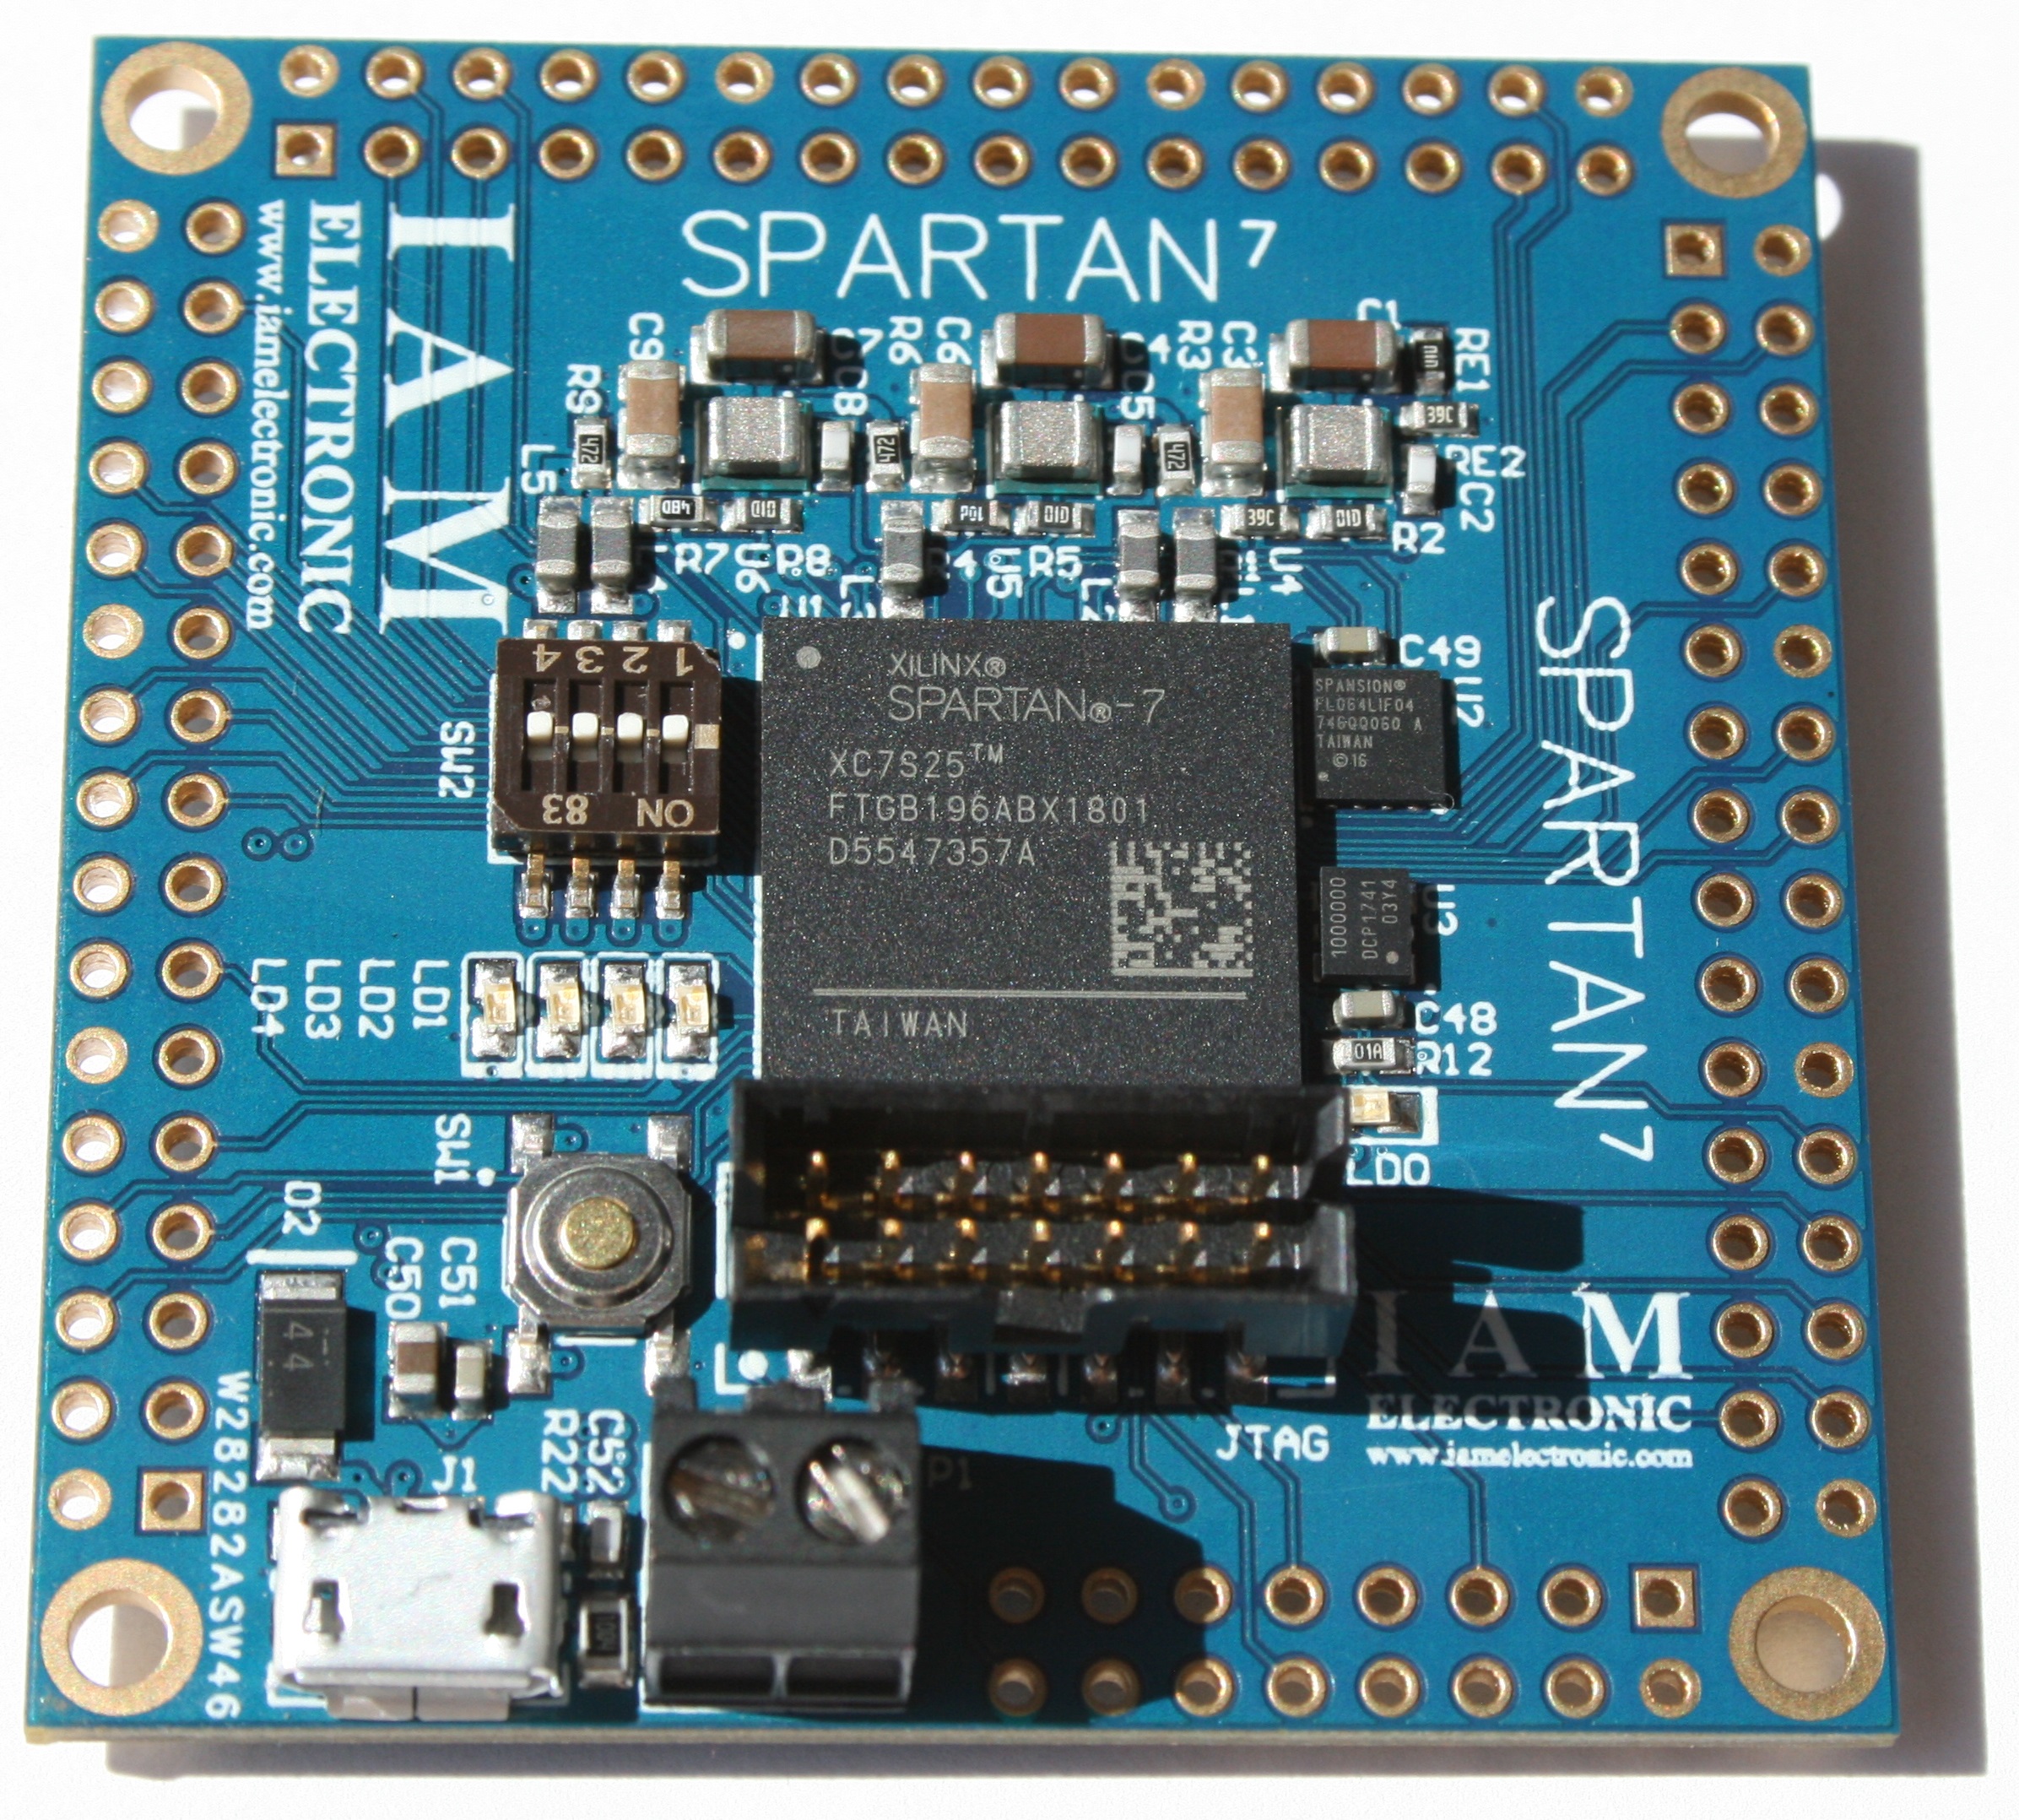 Spartan-7 FPGA Board